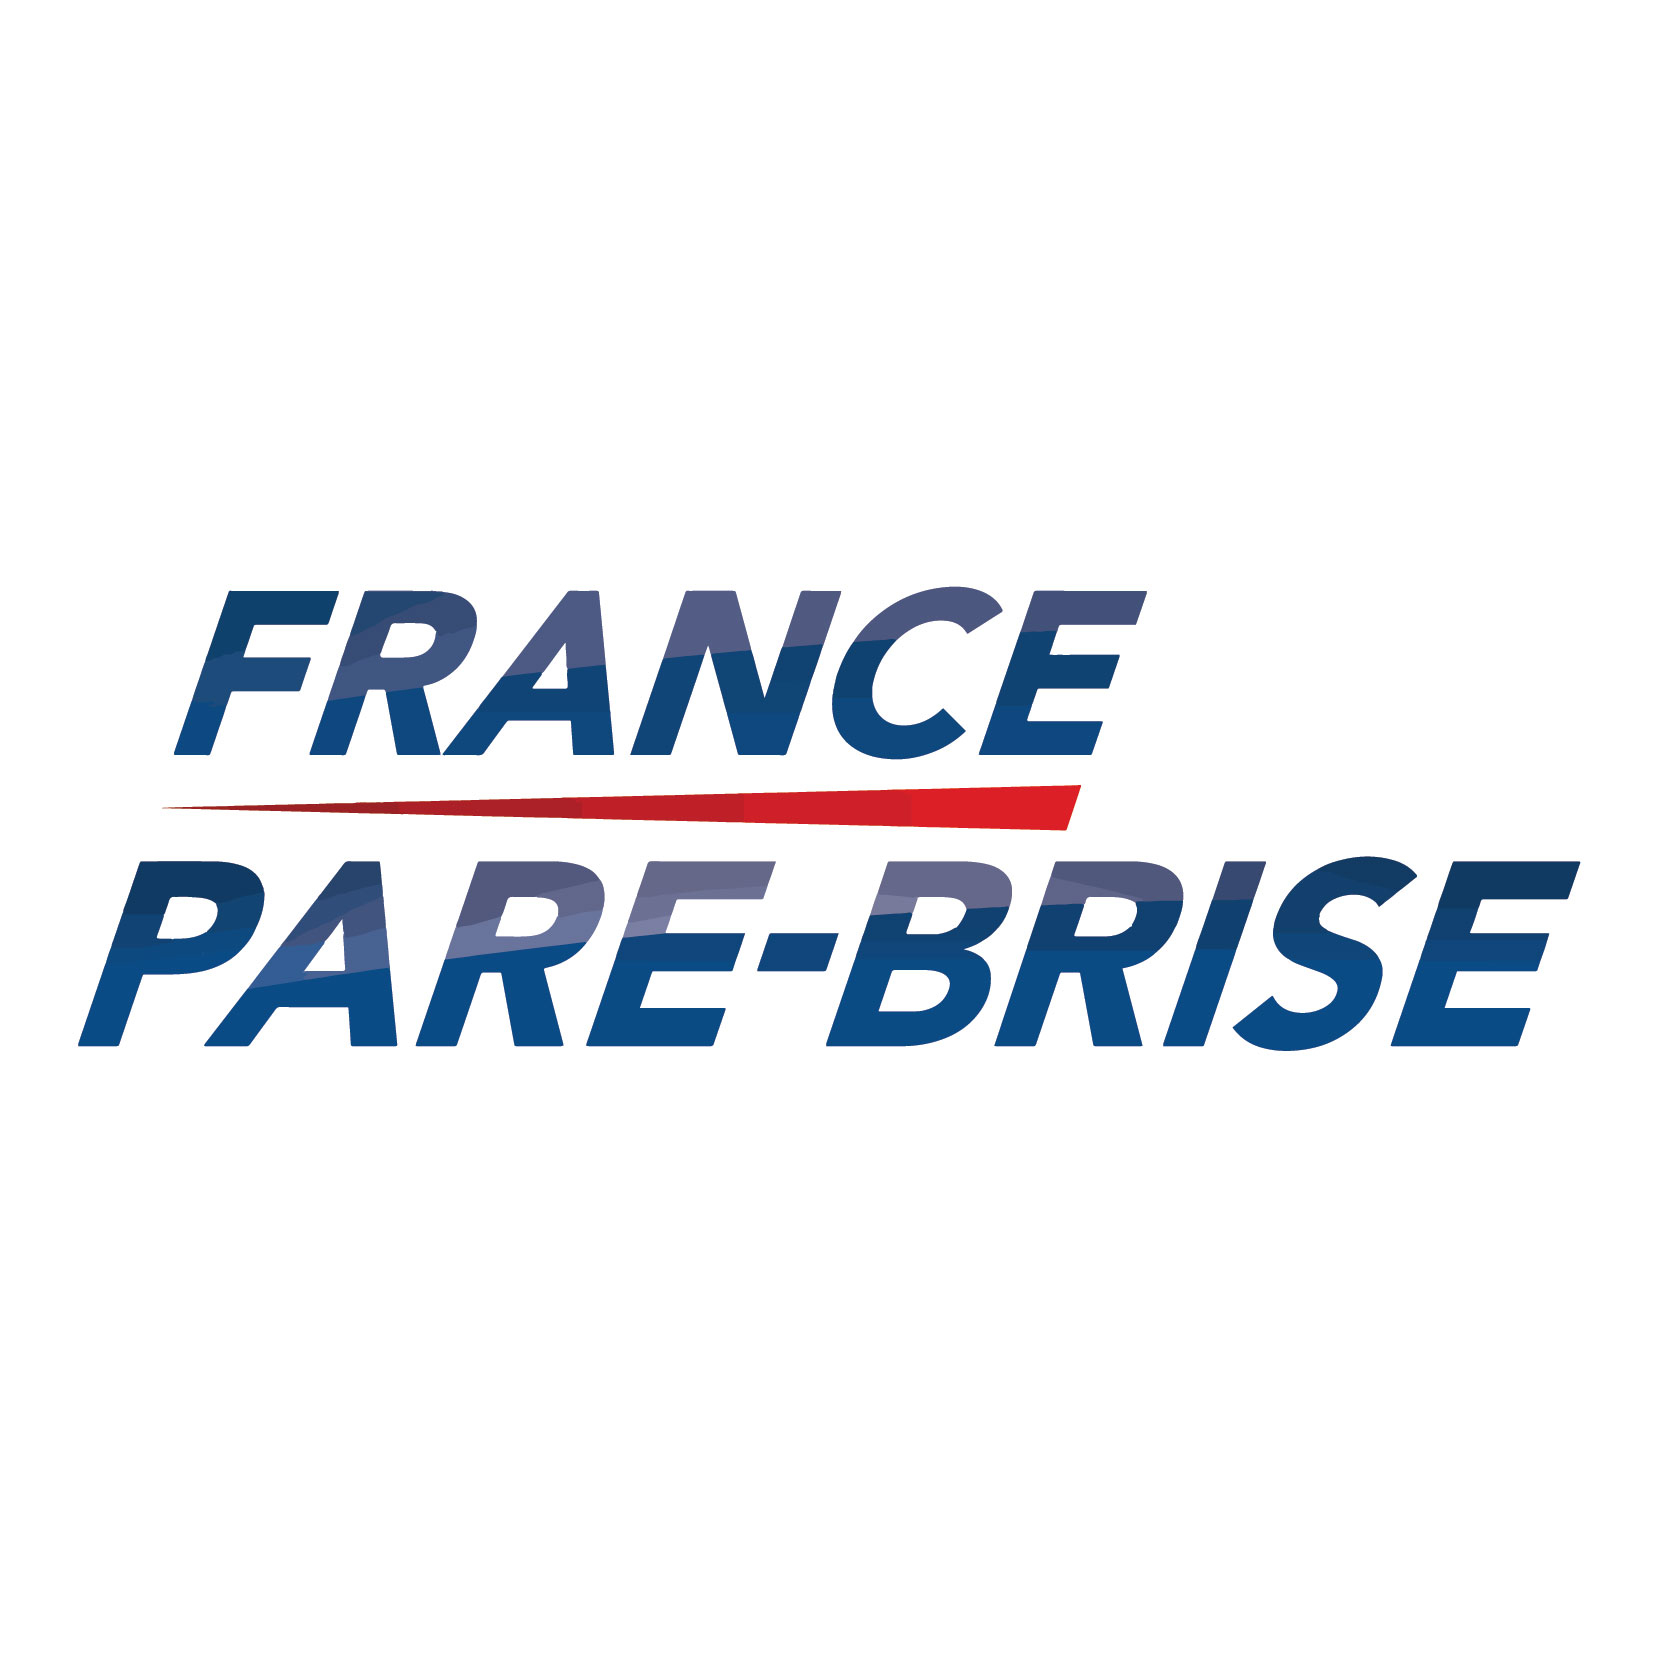 FRANCE PAREBRISE